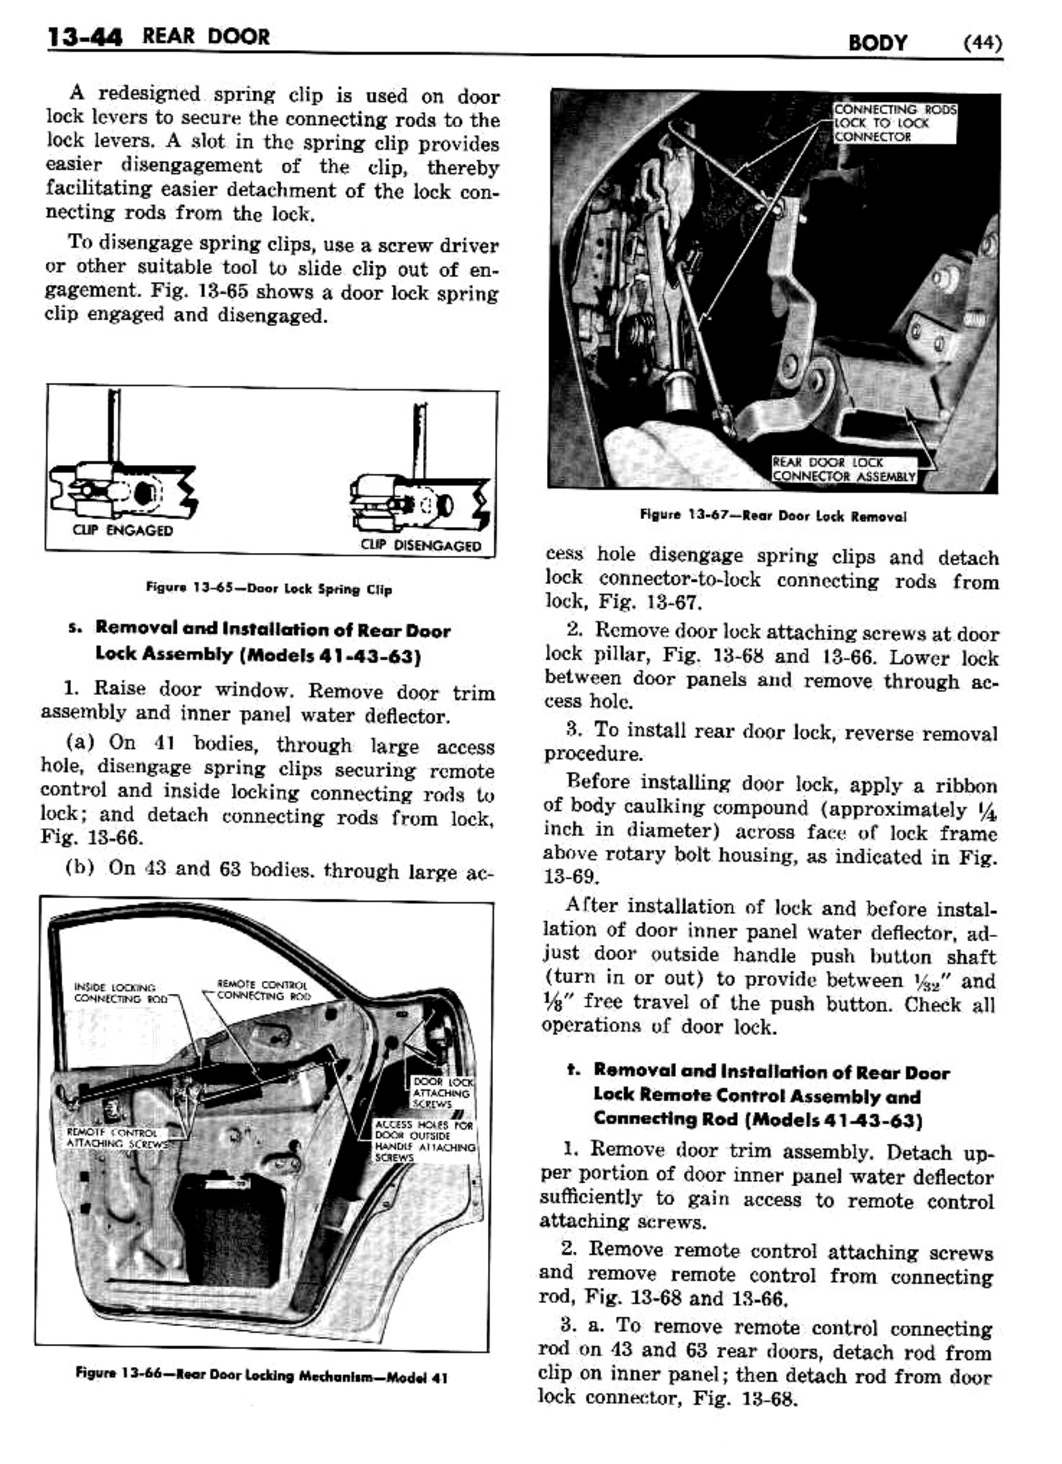 n_1957 Buick Body Service Manual-046-046.jpg